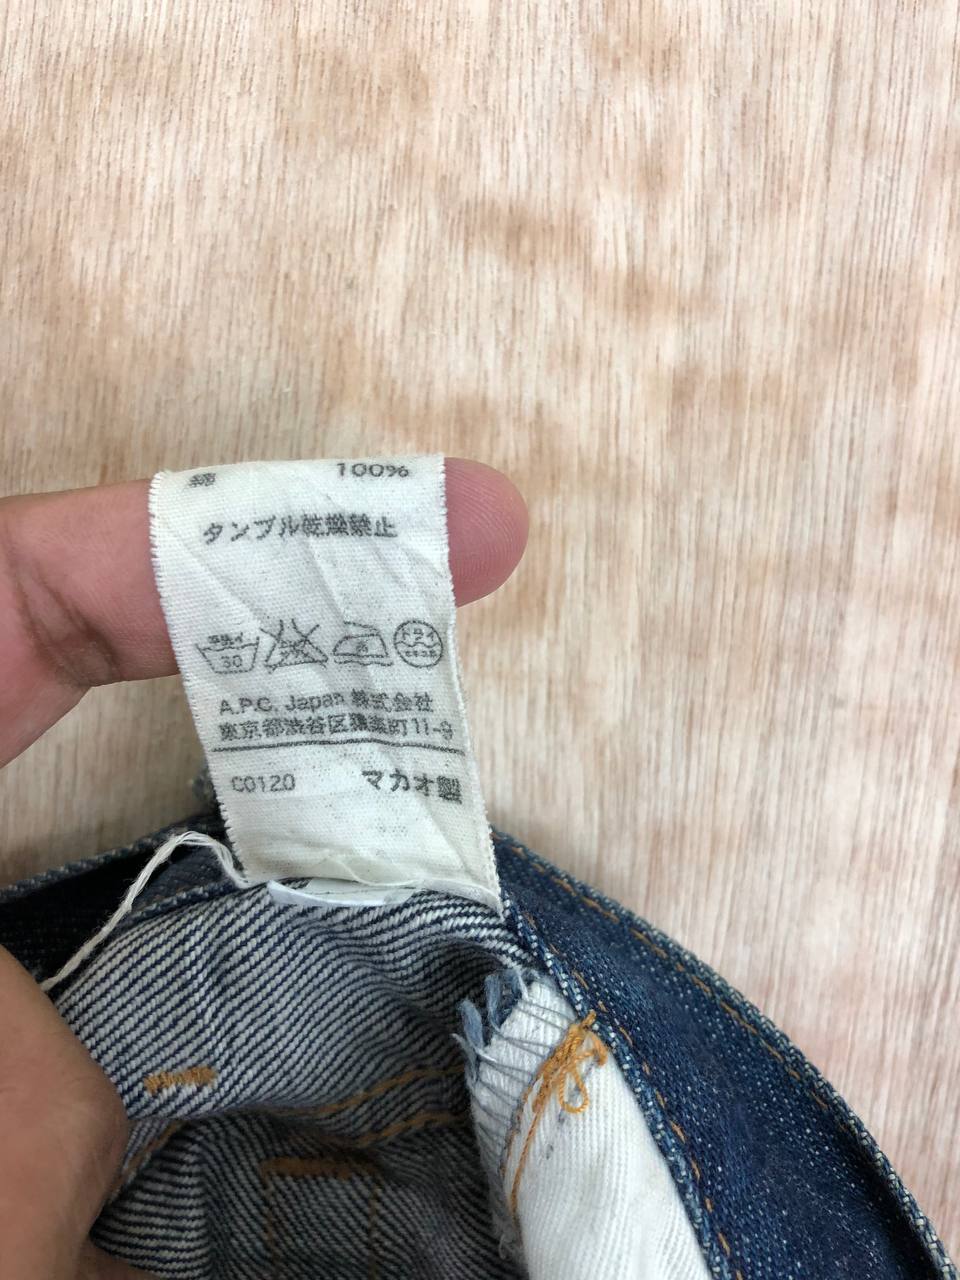 APC Petit Standard Jeans Distressed Selvedge - 22